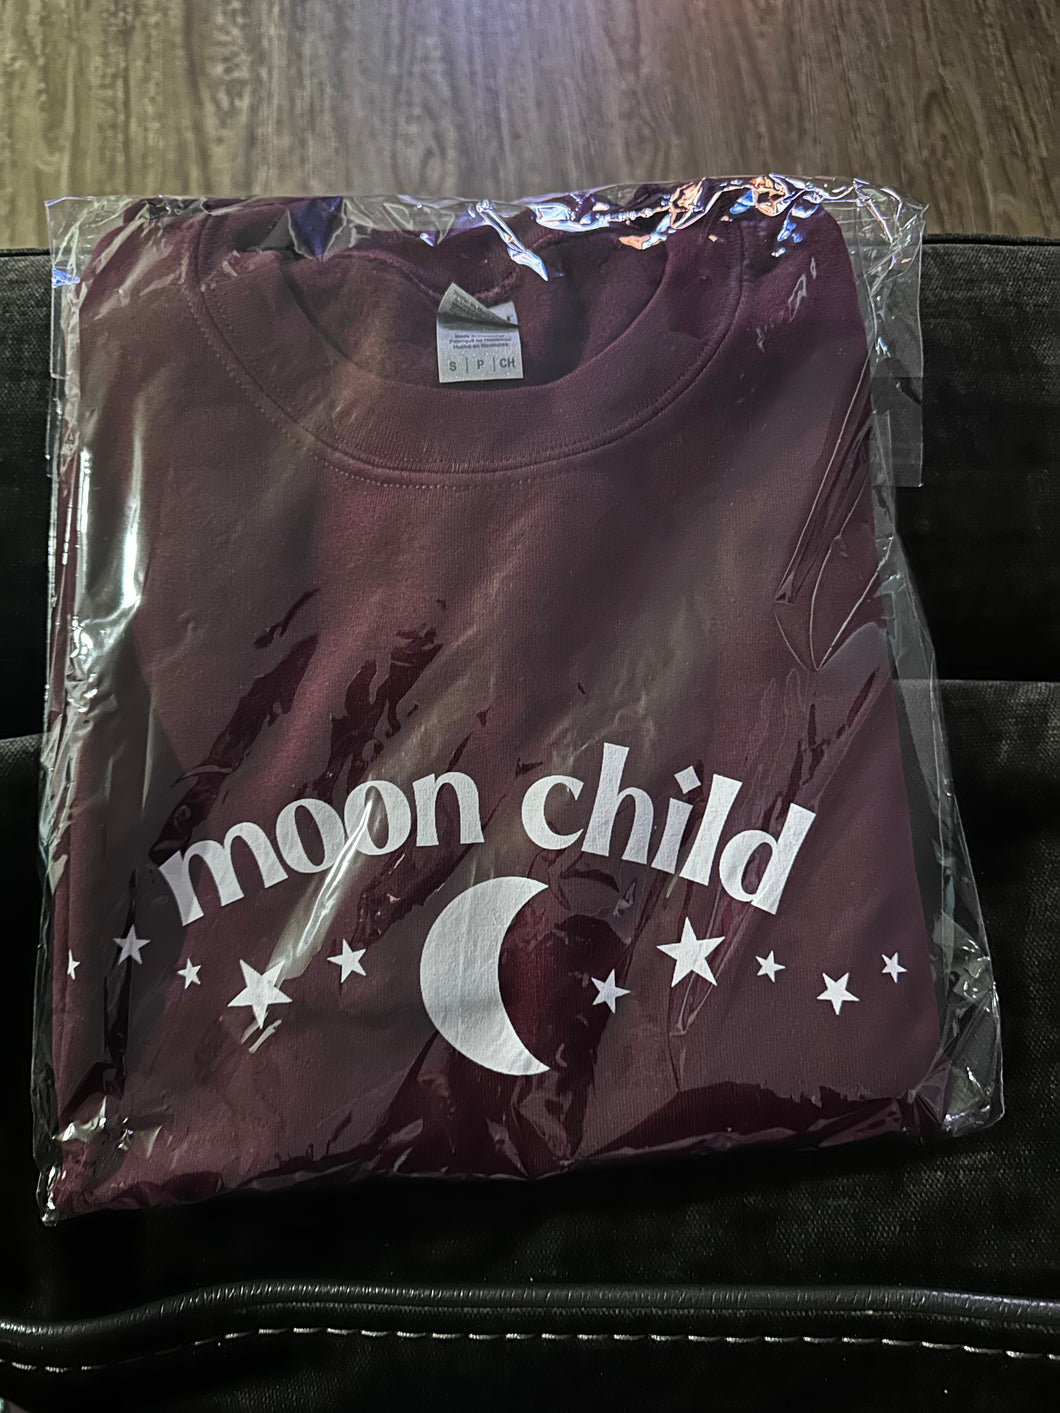 Moon Child Crewneck